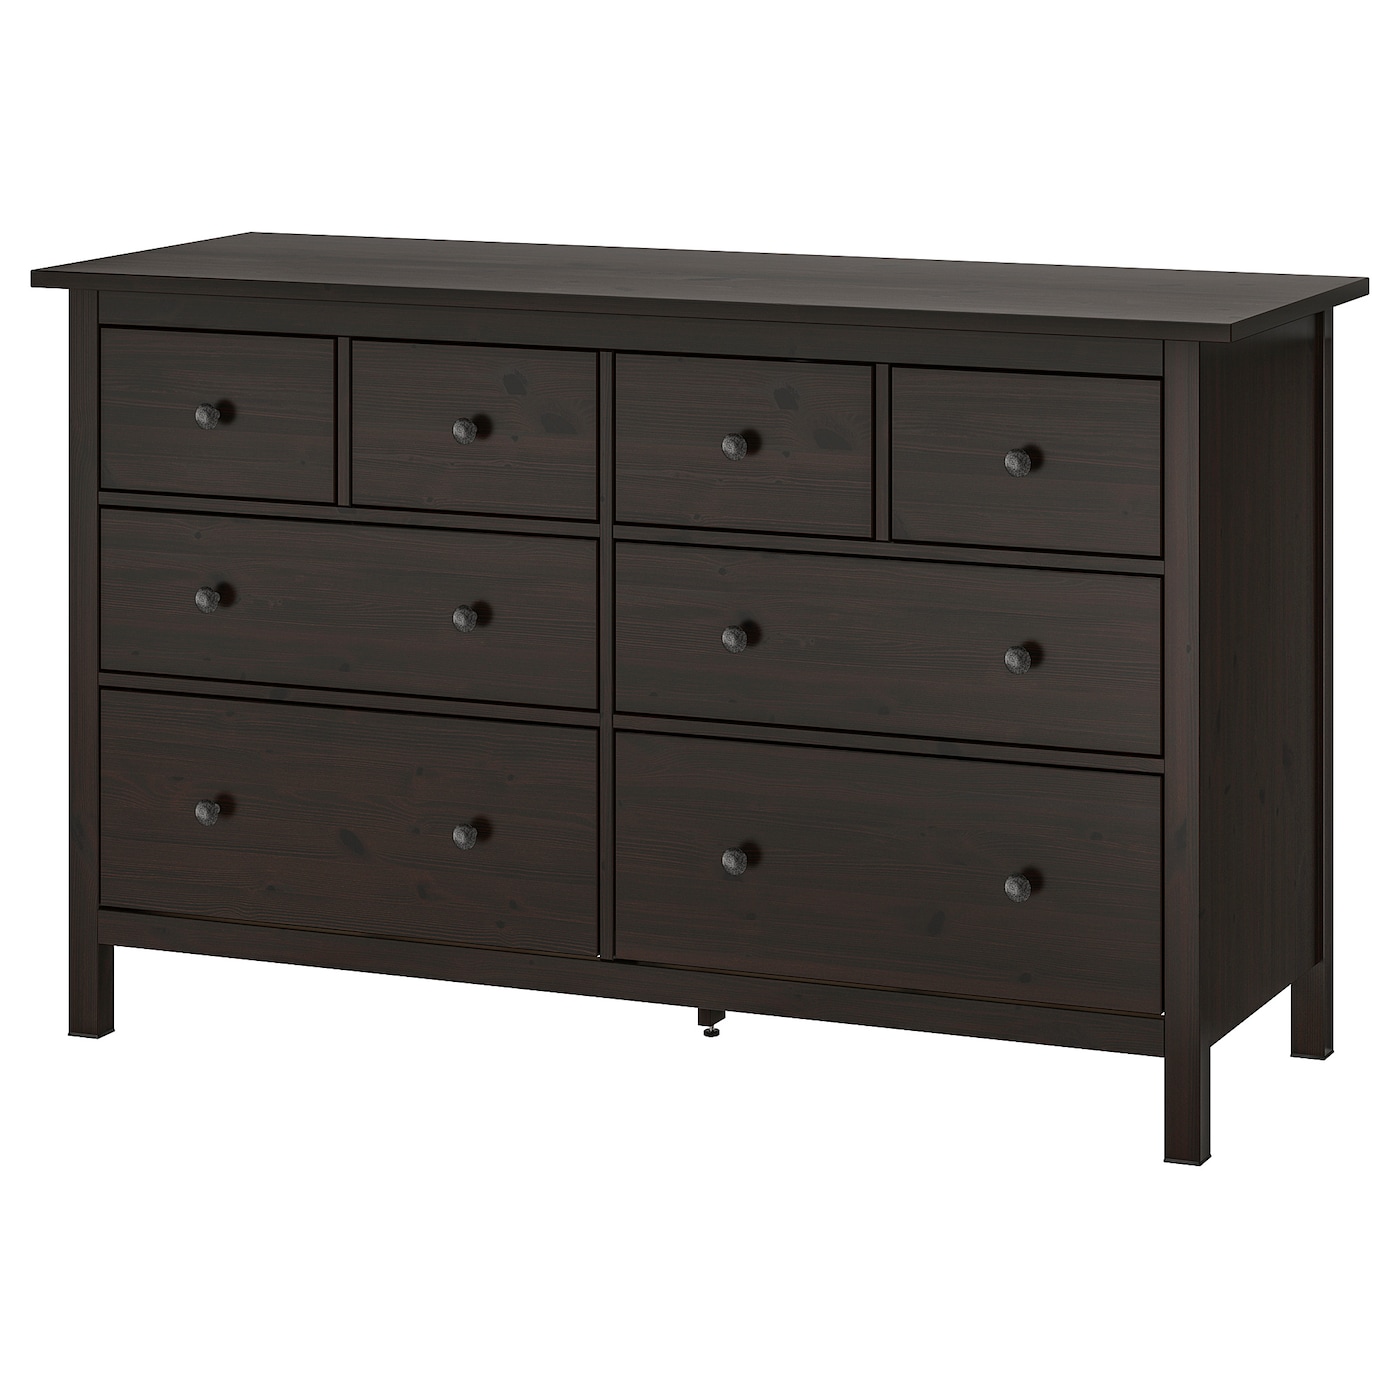 HEMNES 6-drawer chest, black-brown, 108x131 cm (421/2x515/8) - IKEA CA